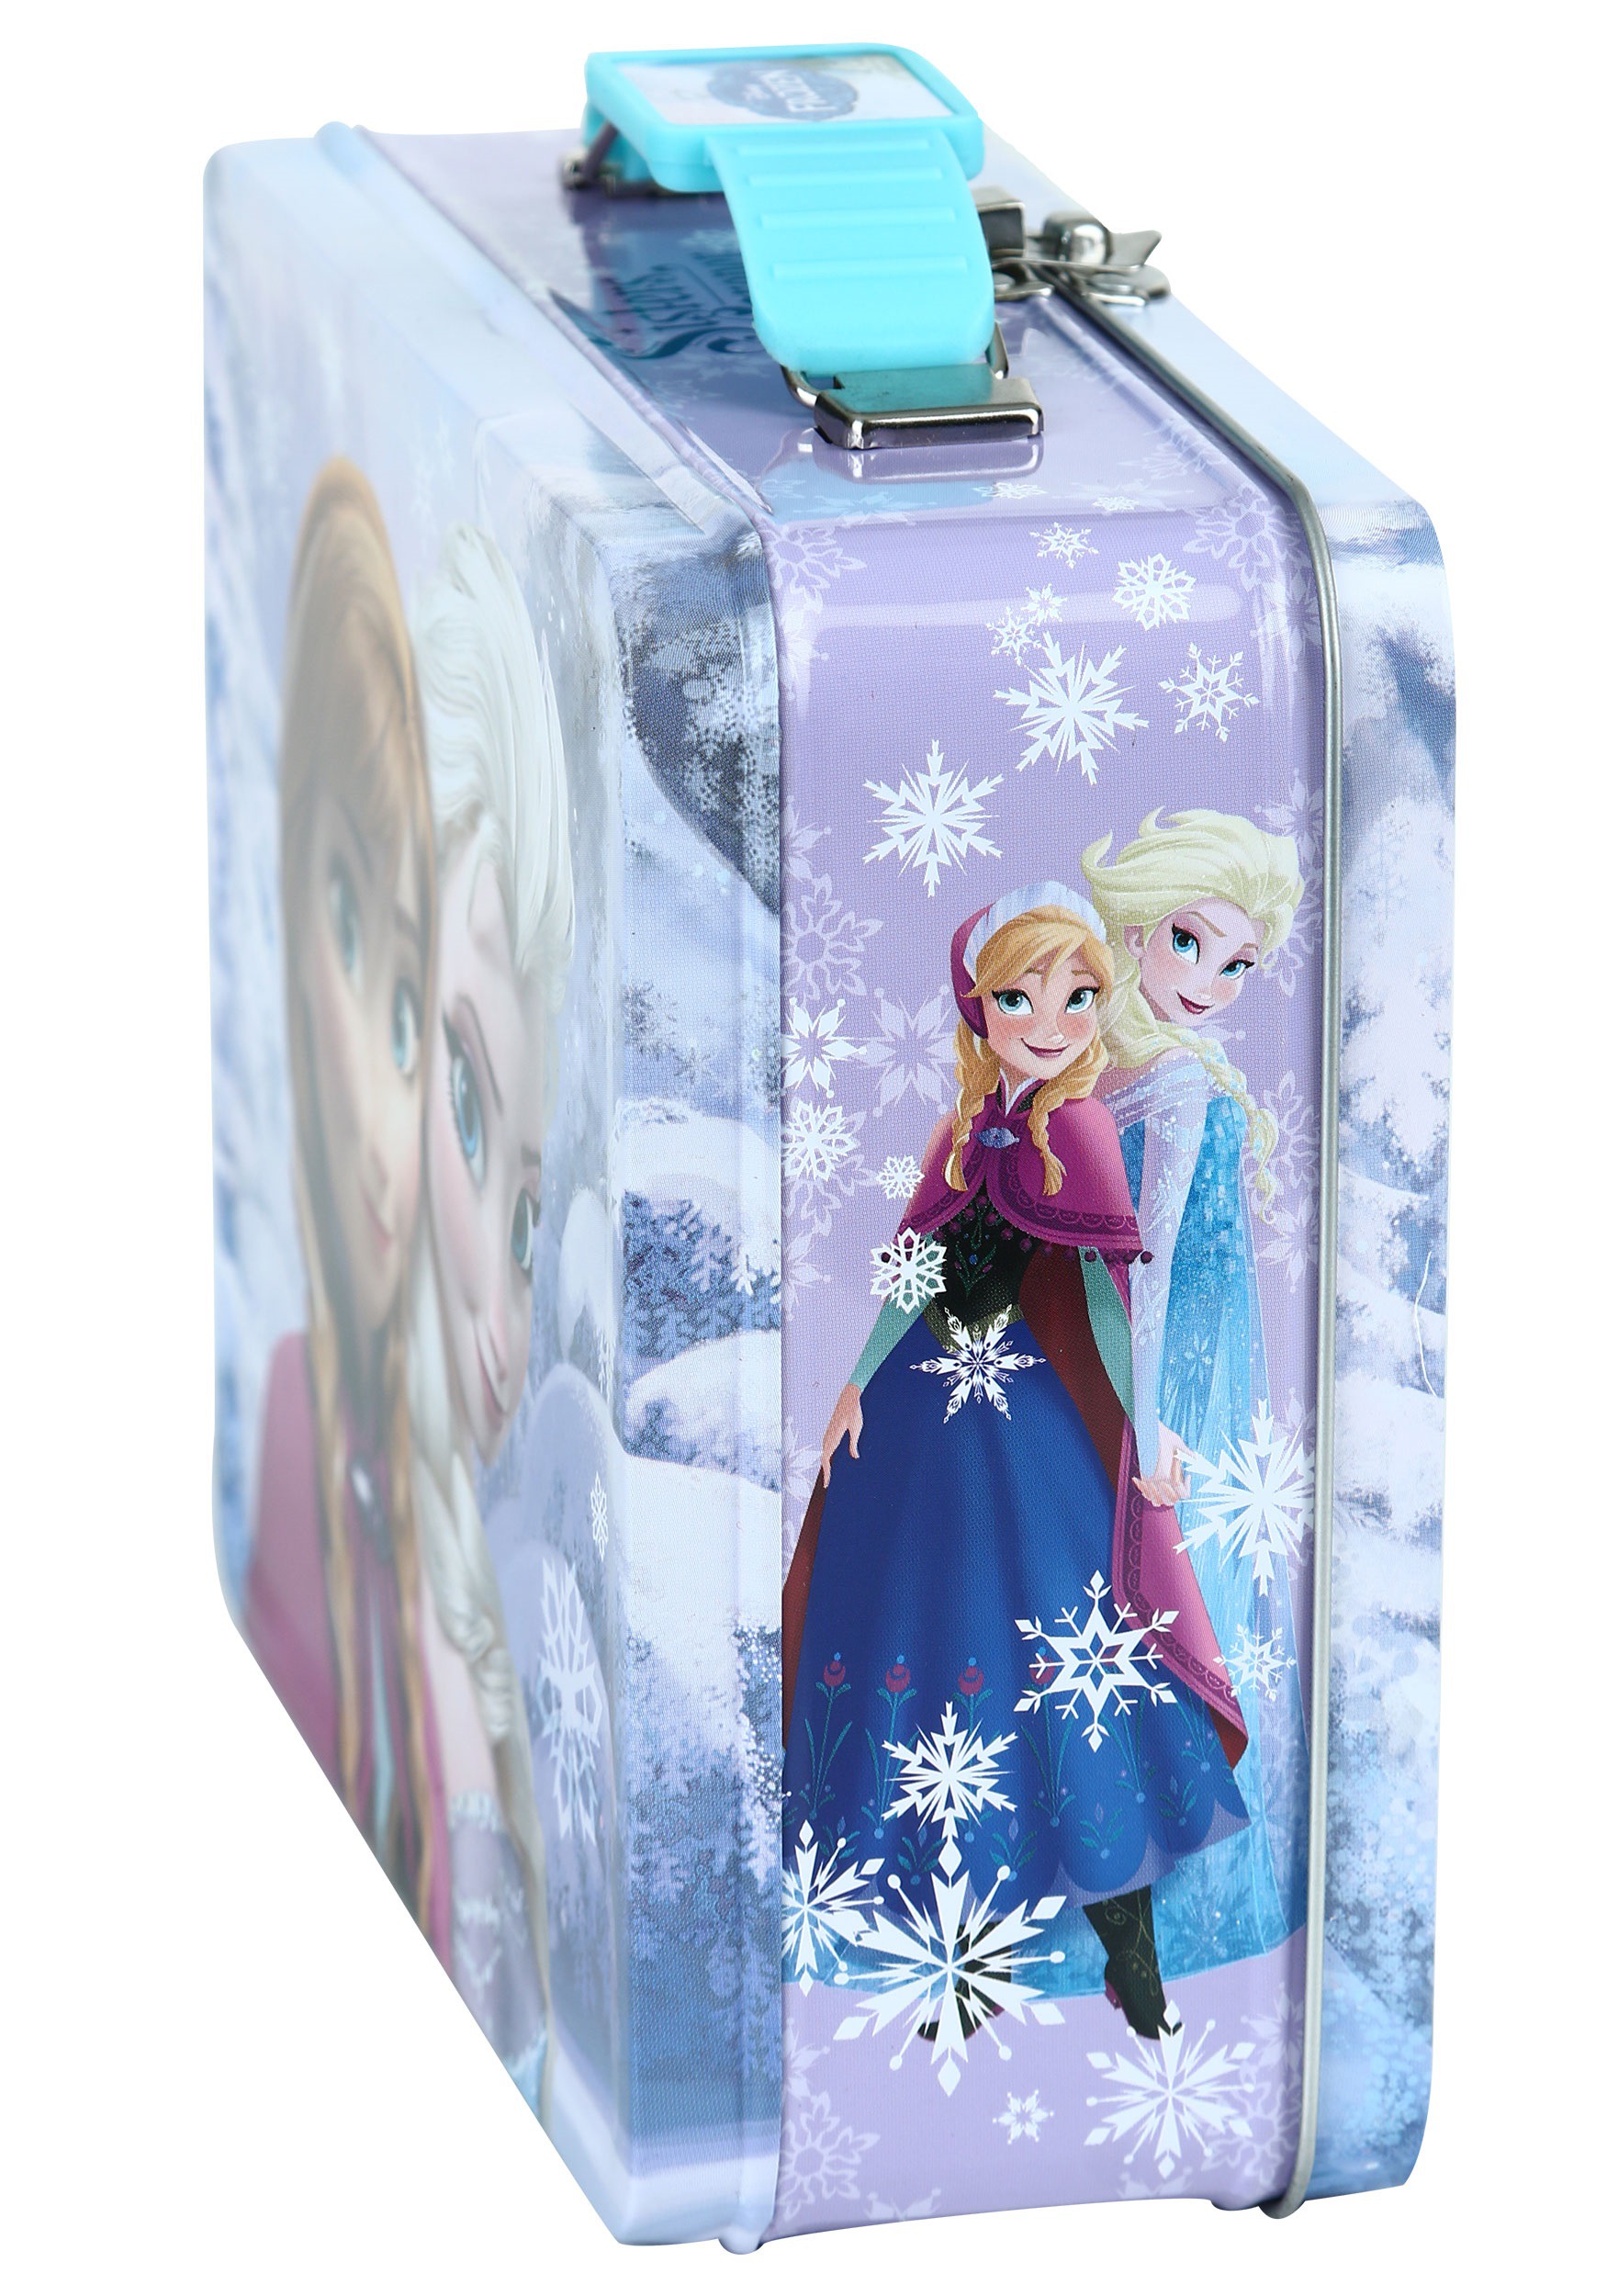 Disney Frozen Metal Lunchbox-frozen Metal Lunch Box-kids Lunchbox-frozen  Lunch Box-frozen Elsa Anna Olaf Tin Lunch Box-gifts 